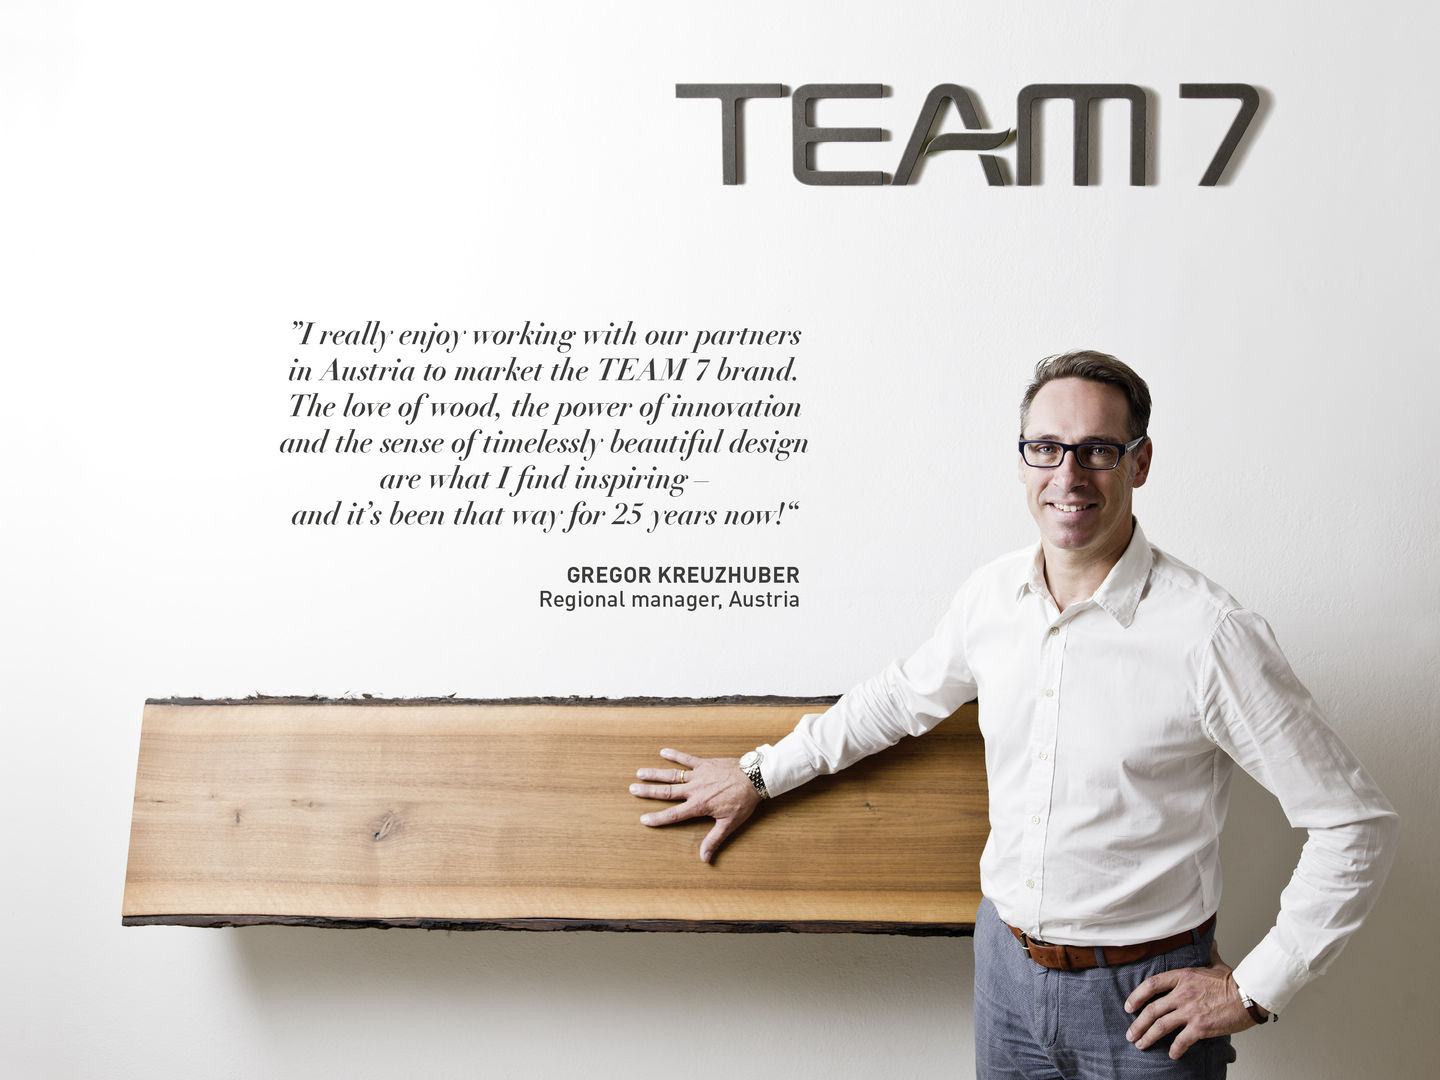 Statement by Gregor Kreuzhuber about working at TEAM 7